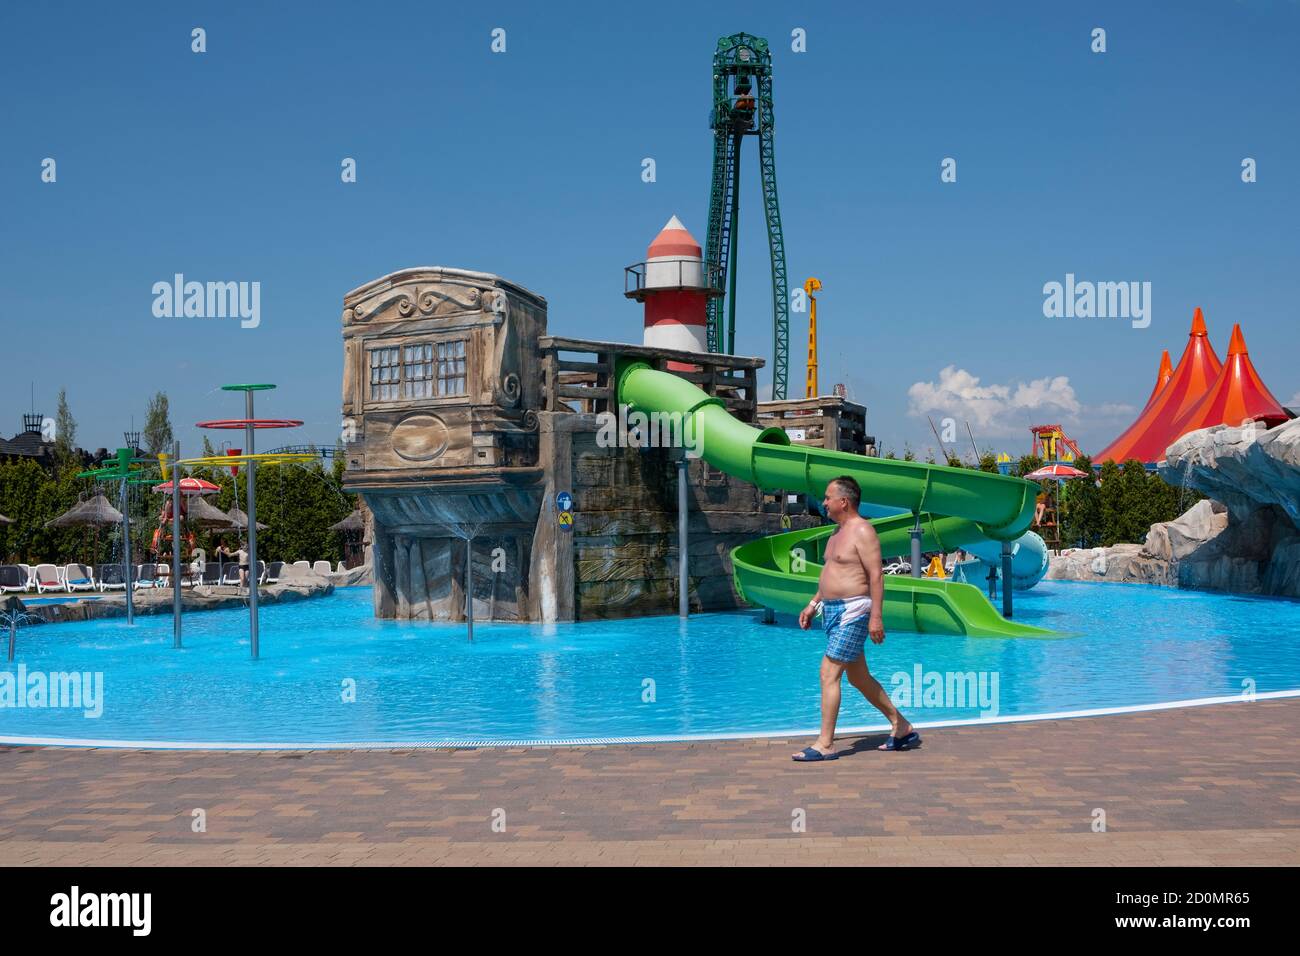 ZATOR, LESSER POLAND / POLAND - JUNE 05, 2019: Man on water amusement park Stock Photo